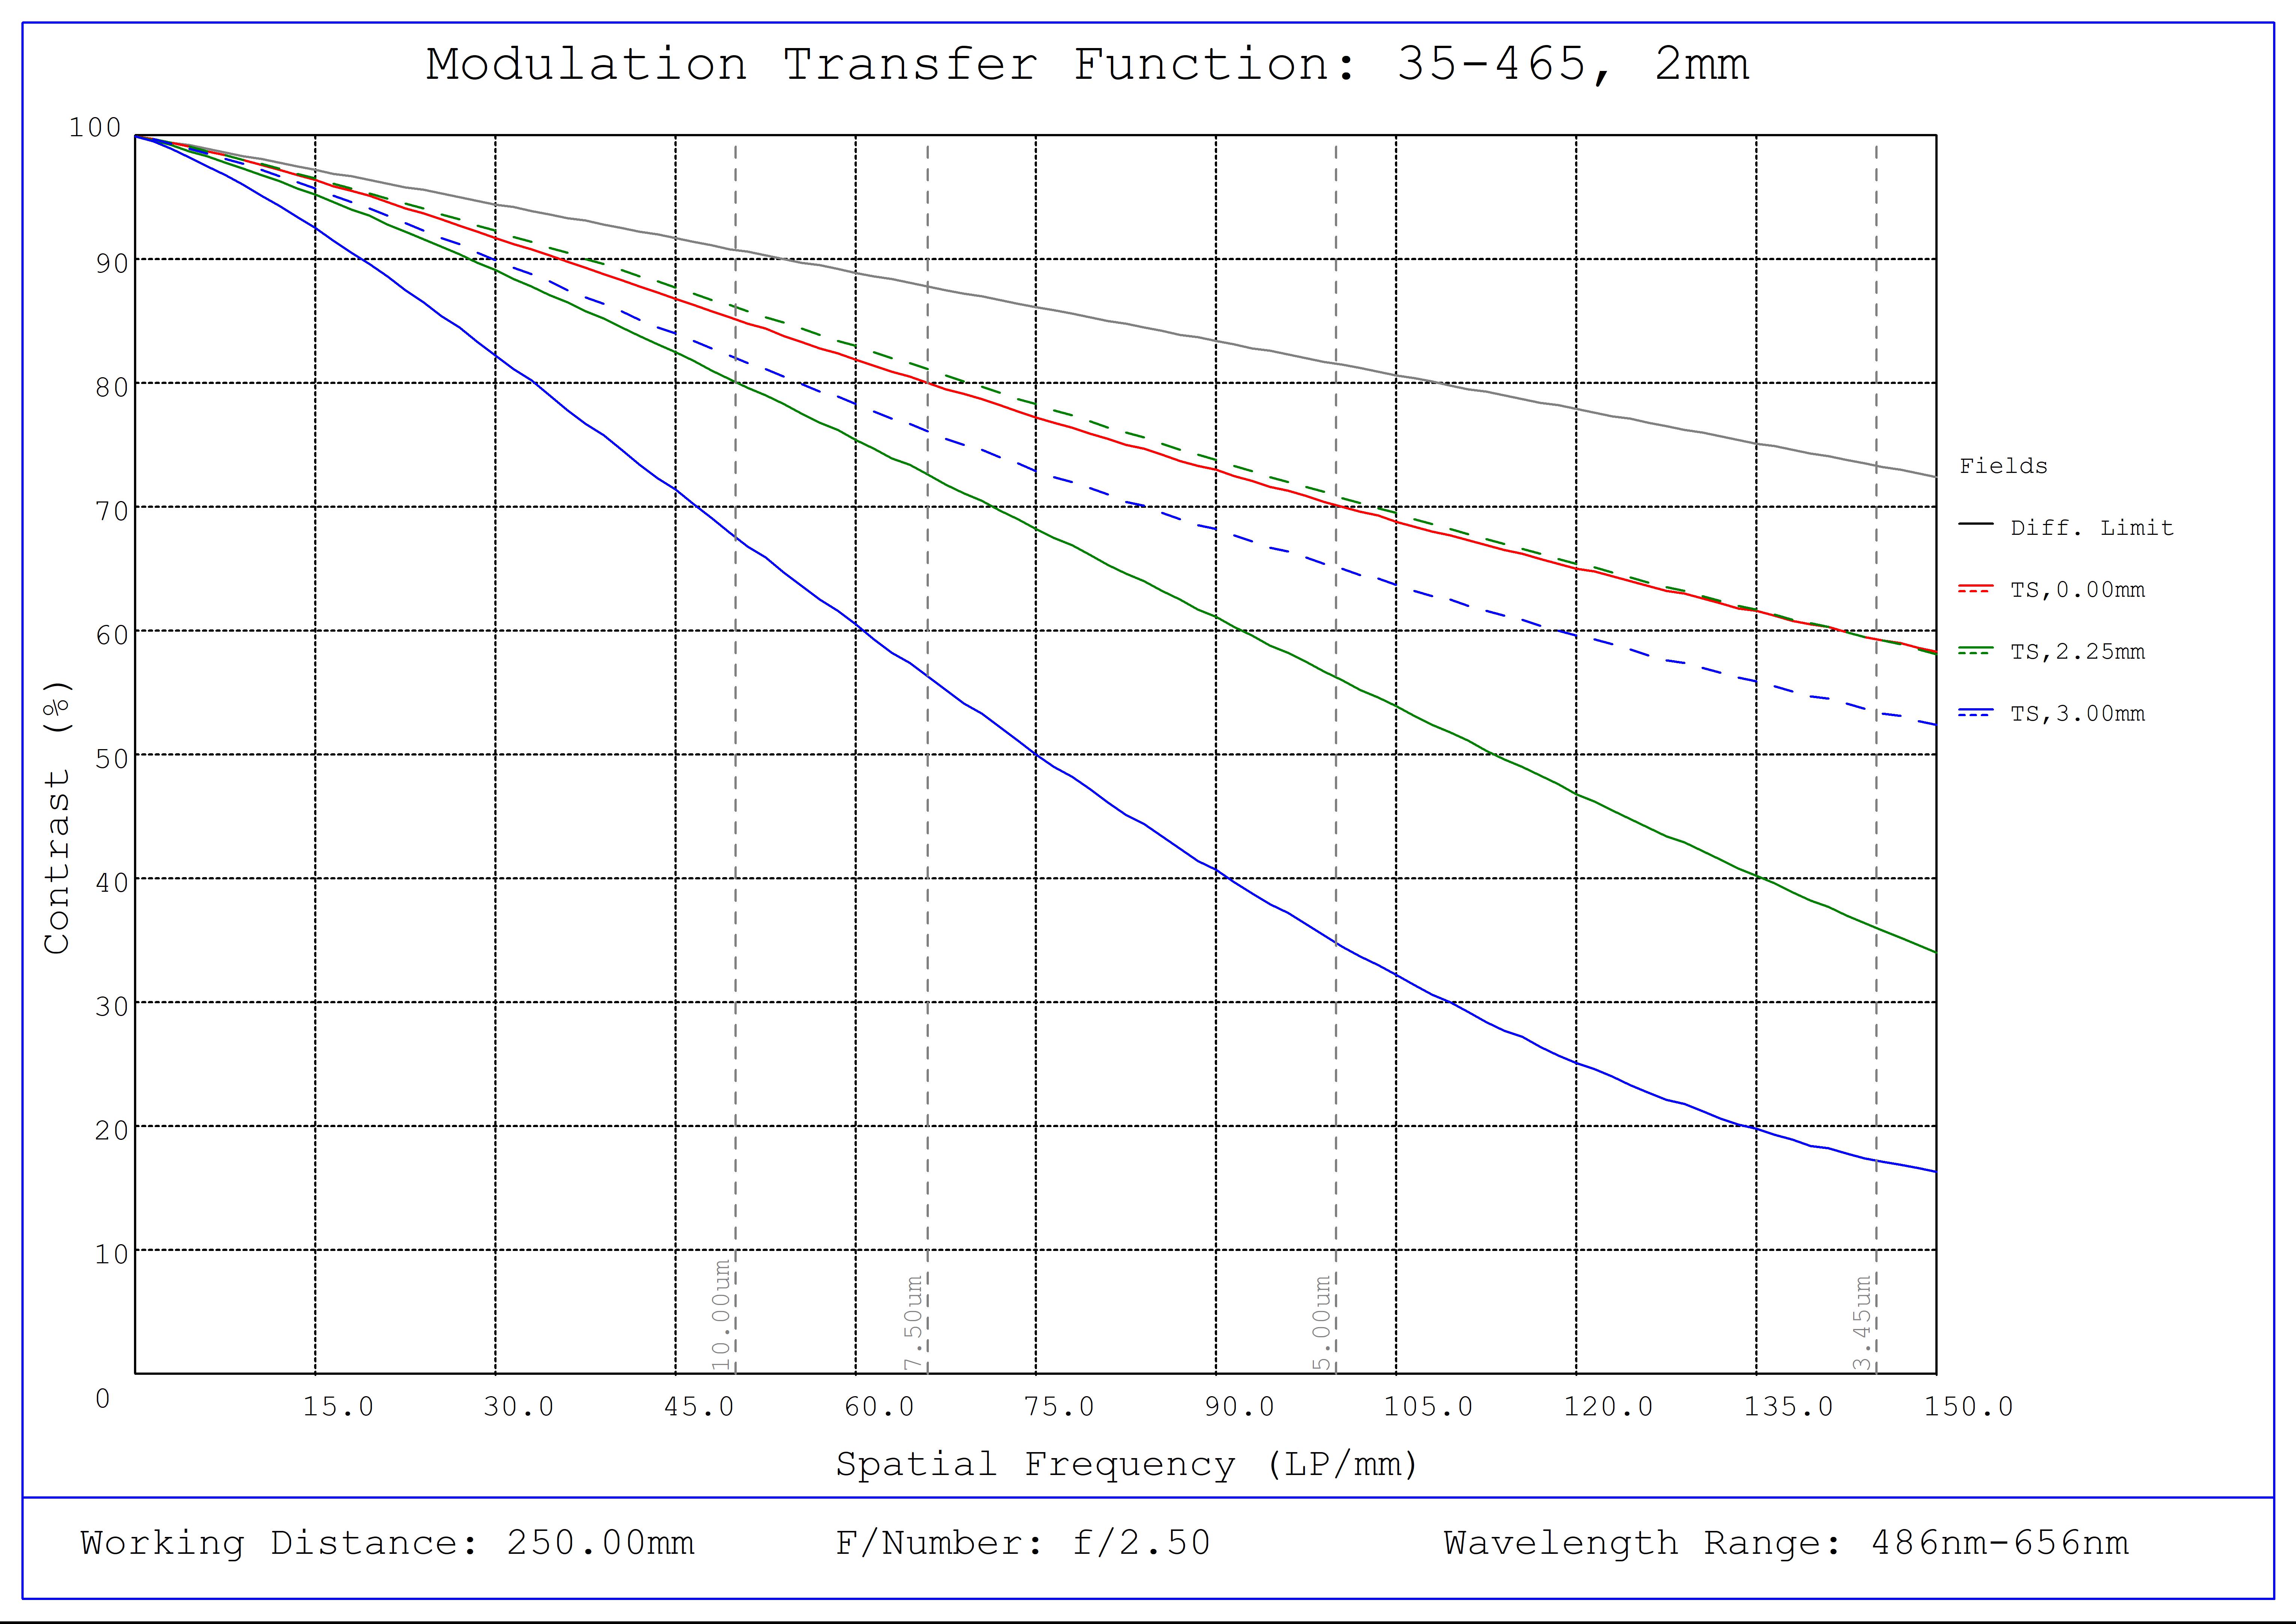 #35-465, 2mm FL f/2.5 IR-Cut, Blue Series M12 Lens, Modulated Transfer Function (MTF) Plot, 250mm Working Distance, f2.5